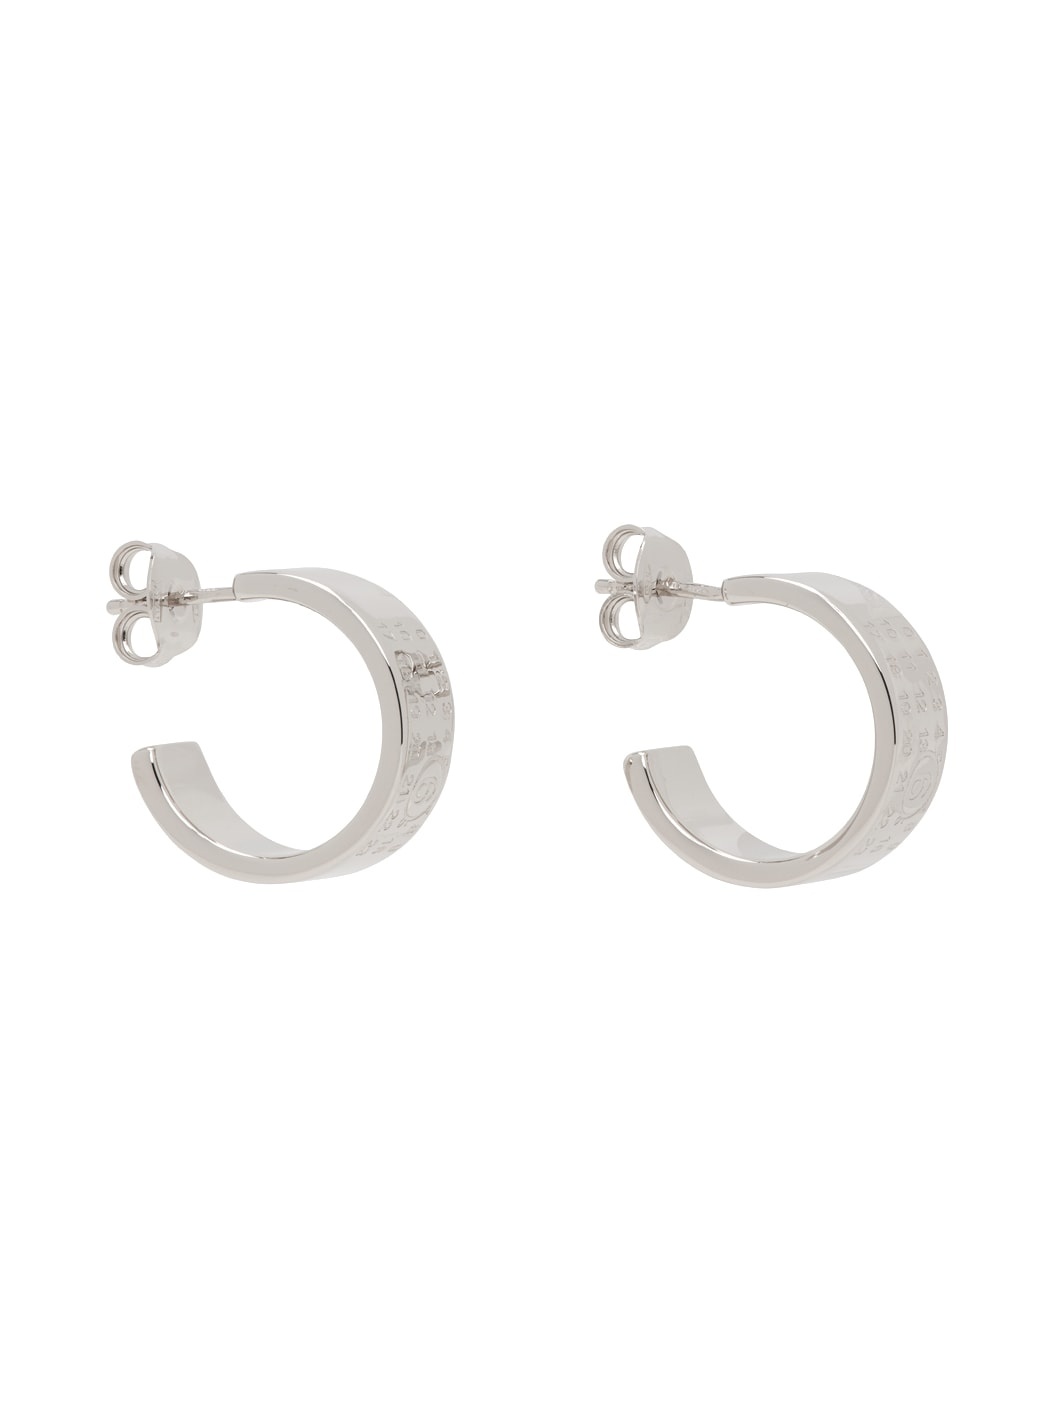 Silver Numeric Minimal Signature Hoop Earrings - 2